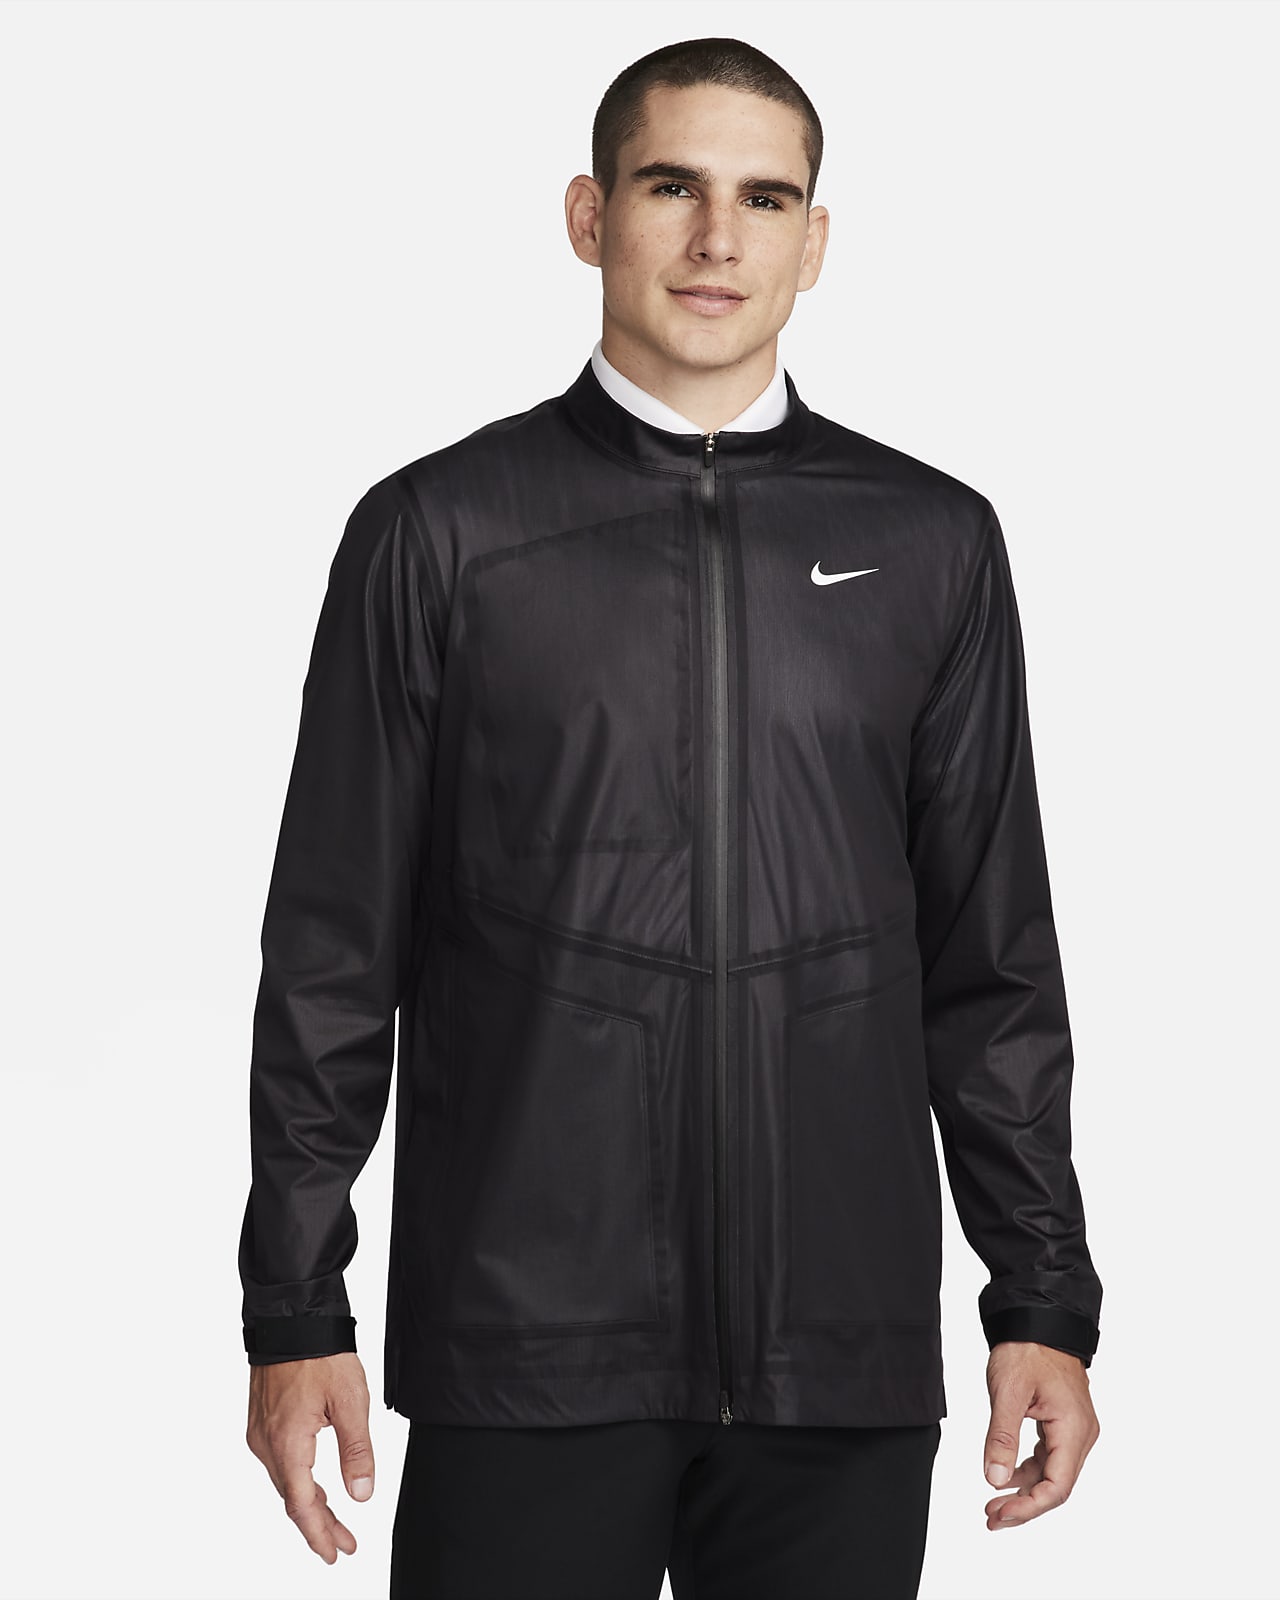 ₪ 259.9 - ₪ 519.9 Full Length Jackets. Nike IL